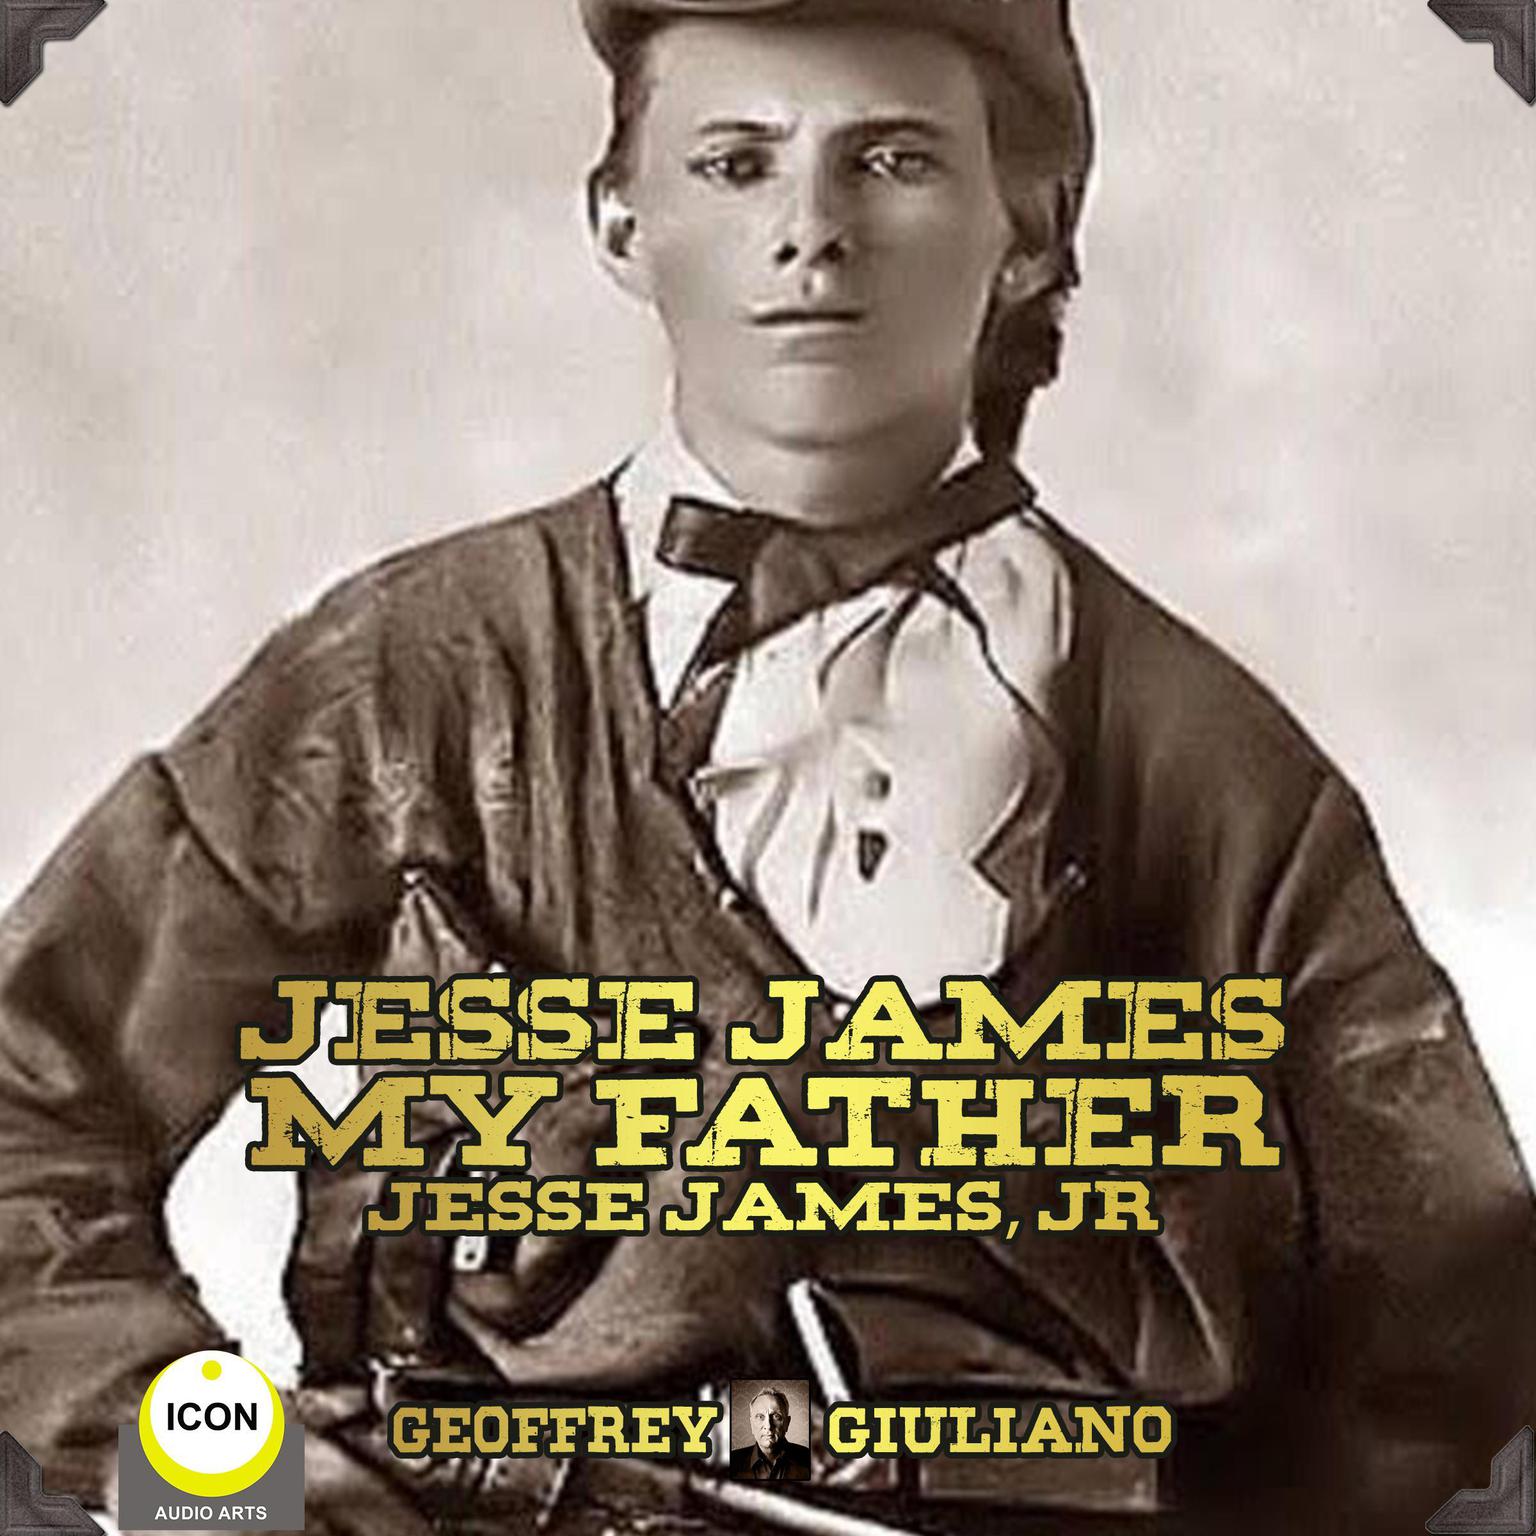 Jesse James My Father - Jesse James, Jr. Audiobook, by Jesse James